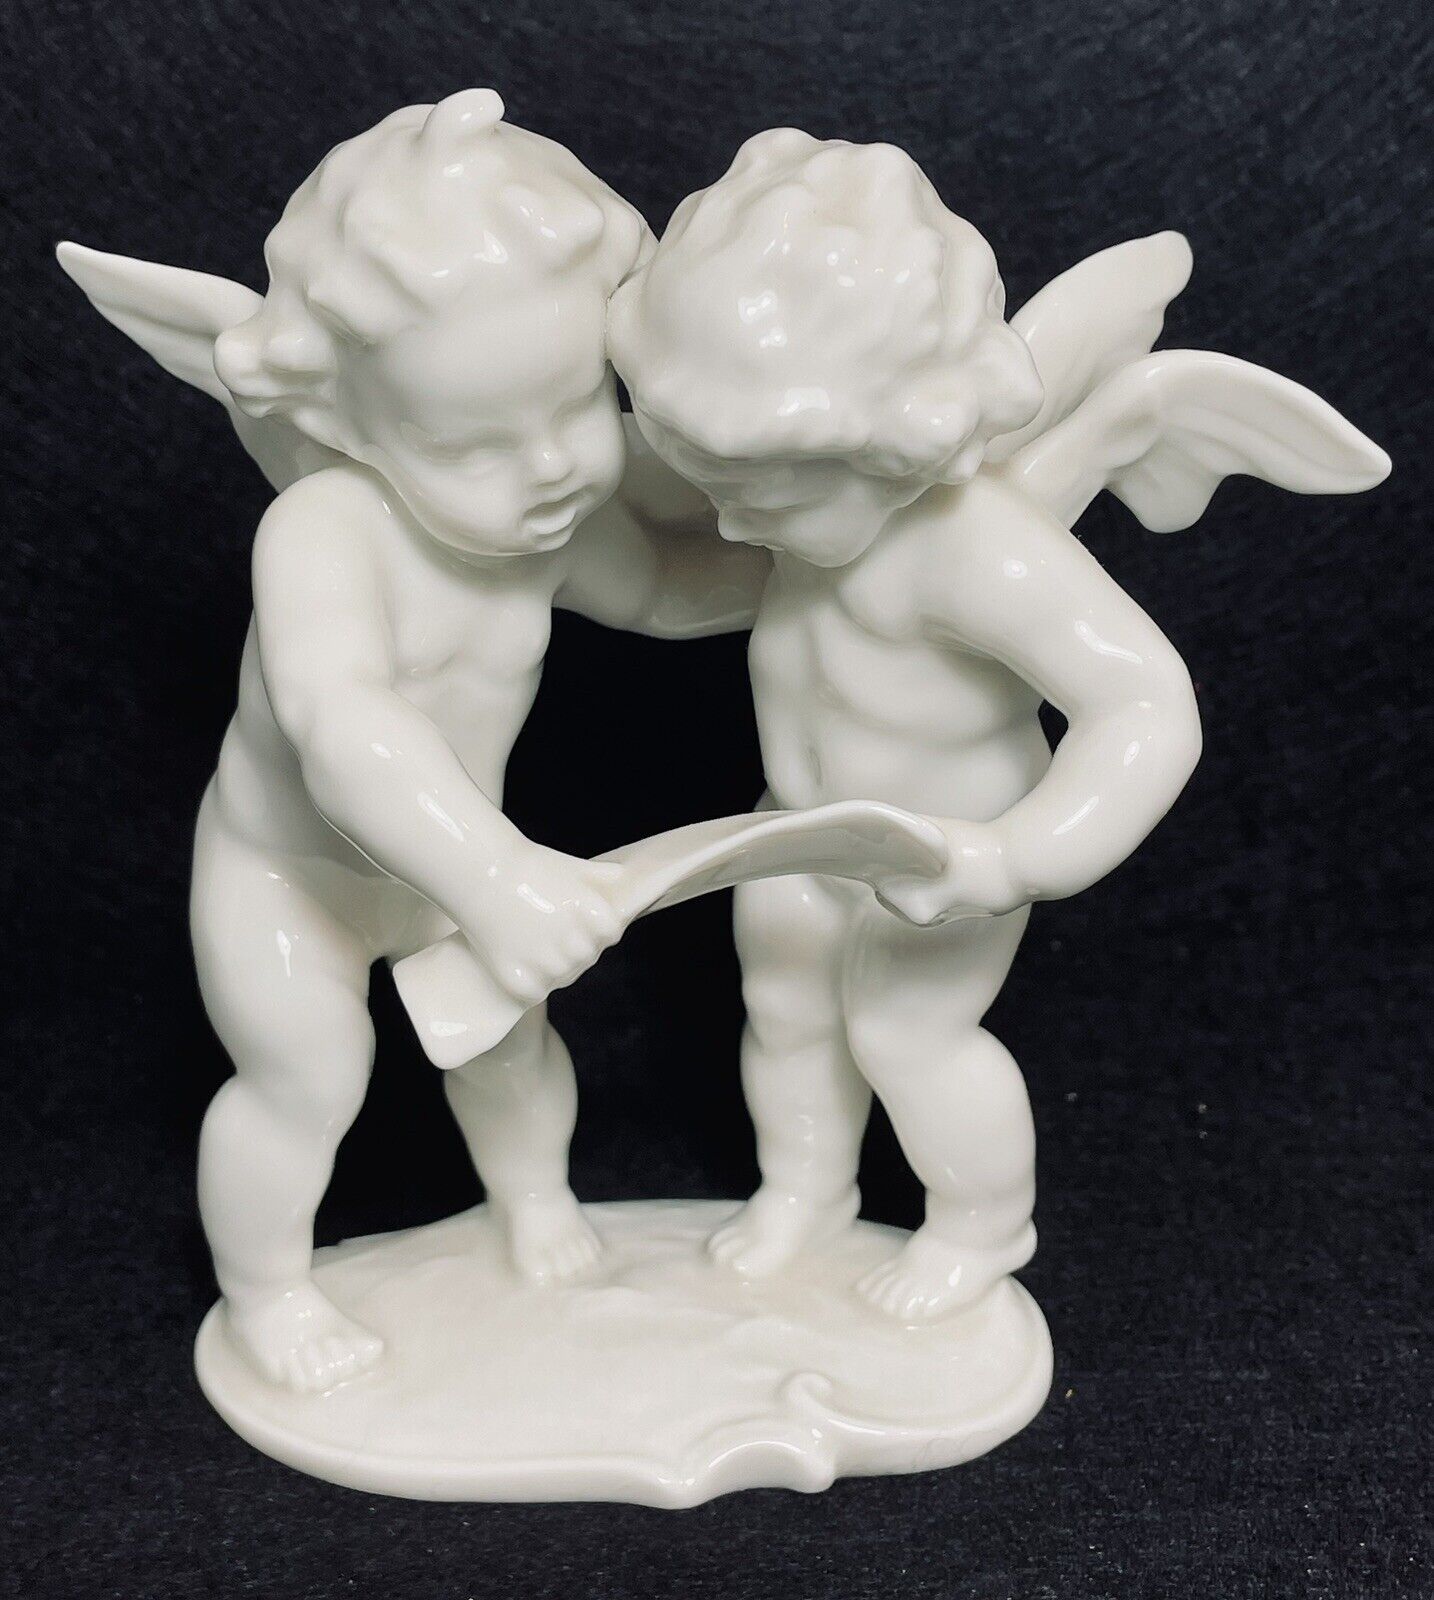 Rare Hutschenreuther Germany White Porcelain Figurine Two Cherubs Angels Ex+